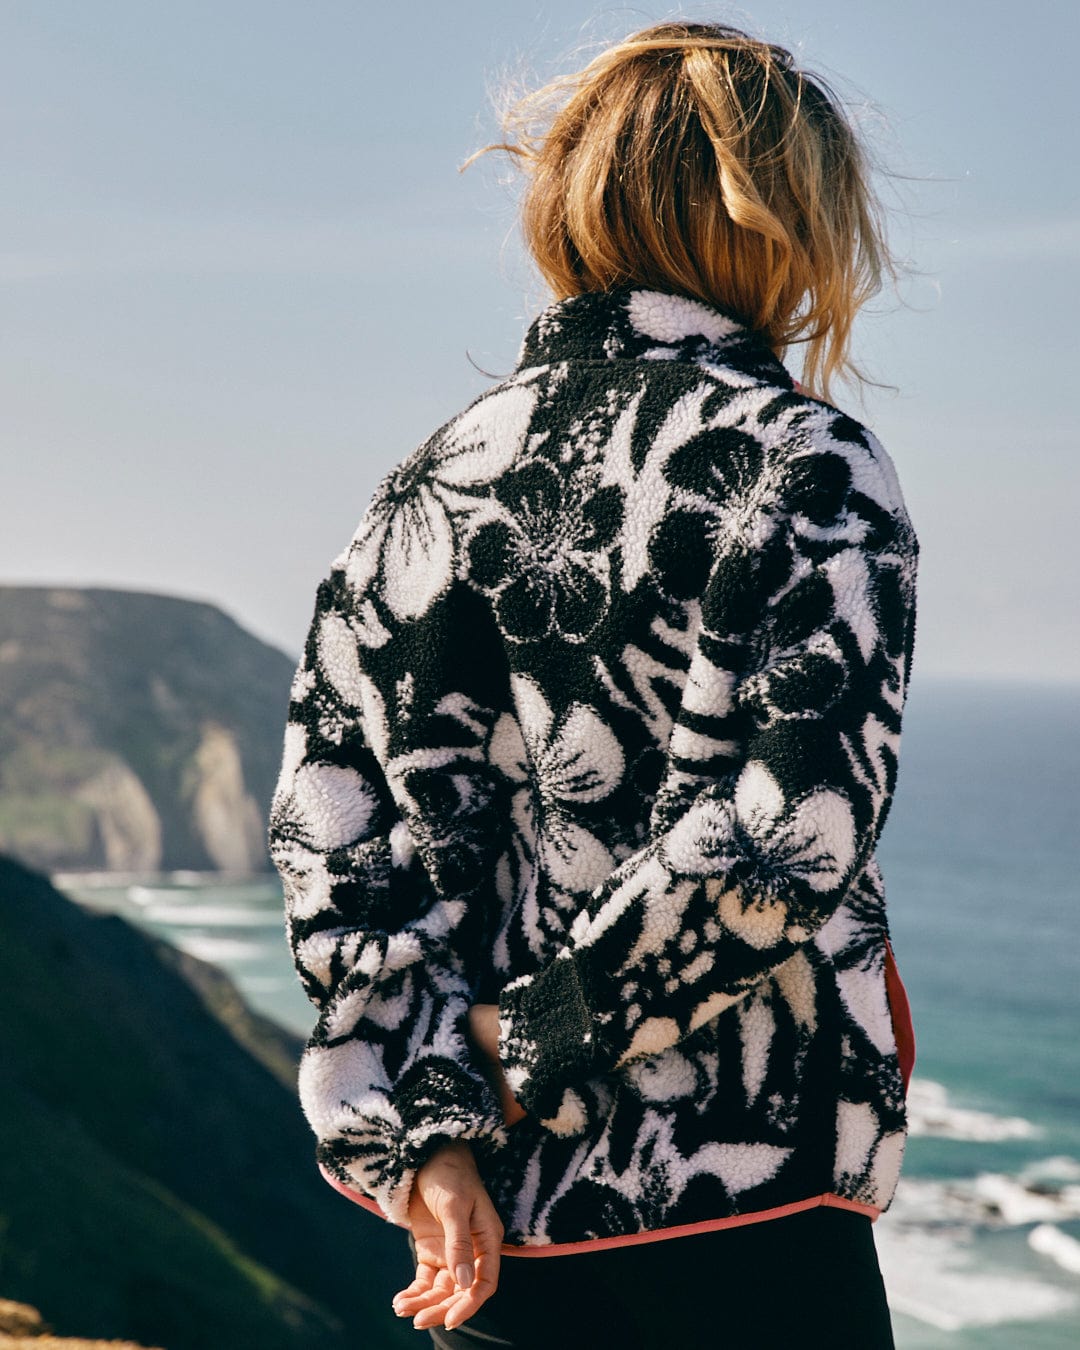 A woman wearing a Saltrock Zella Hibiscus - Womens 1/4 Neck Fleece - Black Floral jacket on a cliff overlooking the ocean.